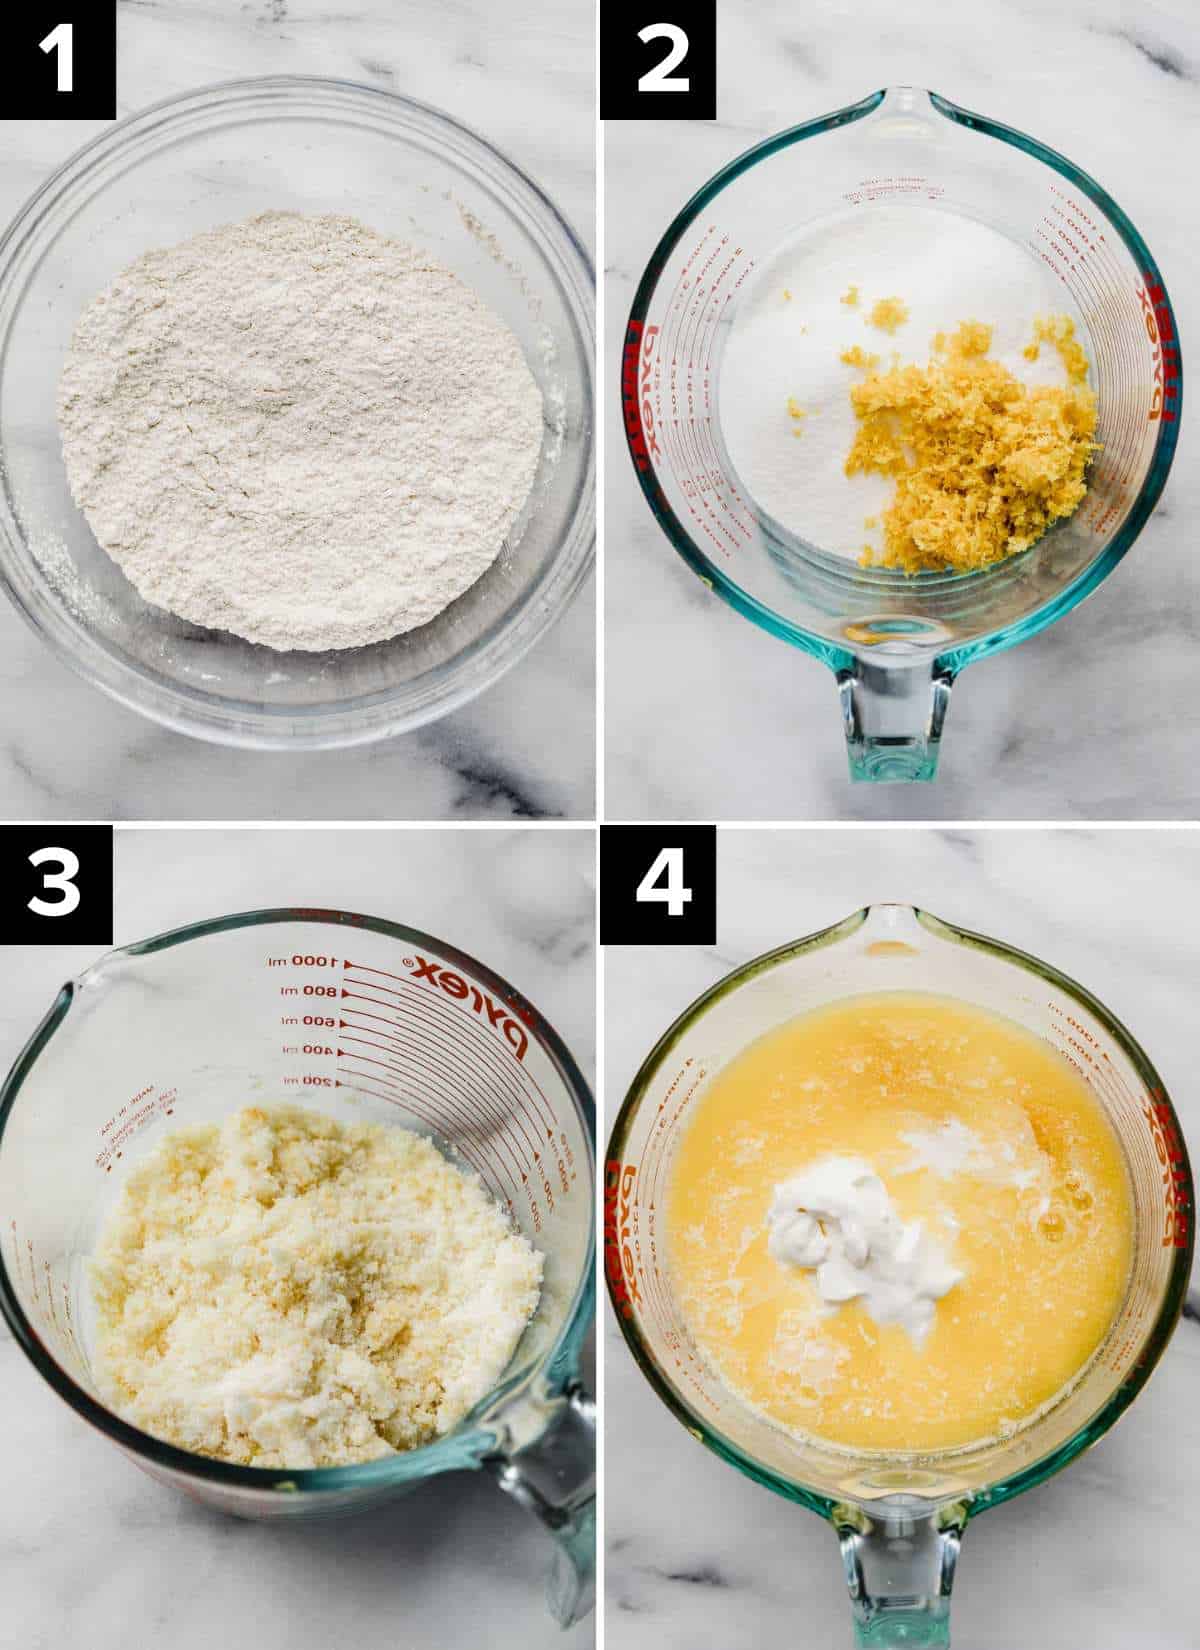 Four images showing how to make Lemon Cupcake batter.